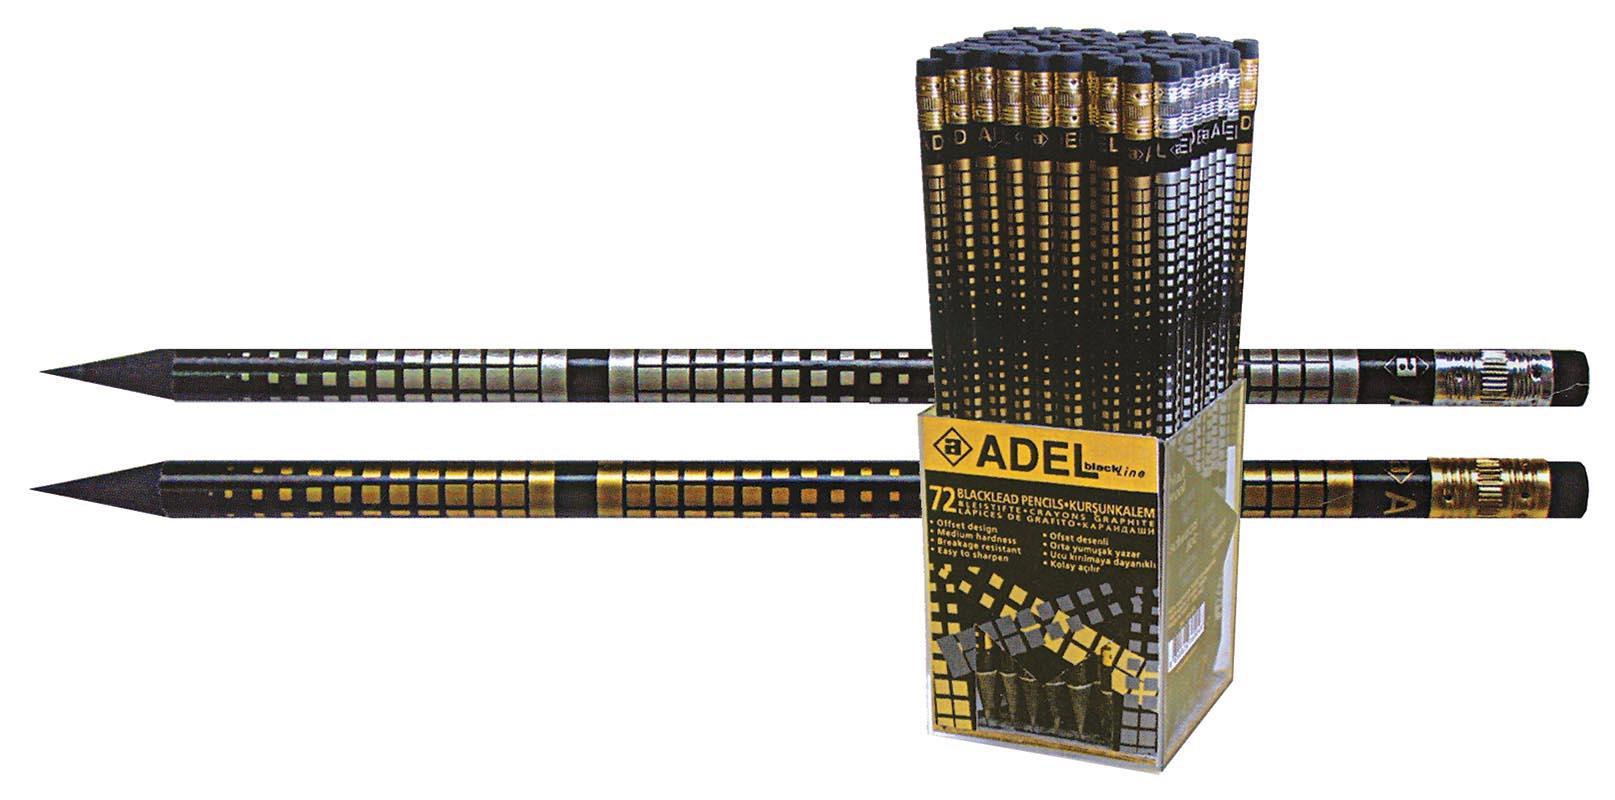 Adel Adel μολύβι με σβήστρα Net χρυσό & ασημί 21695---03-2